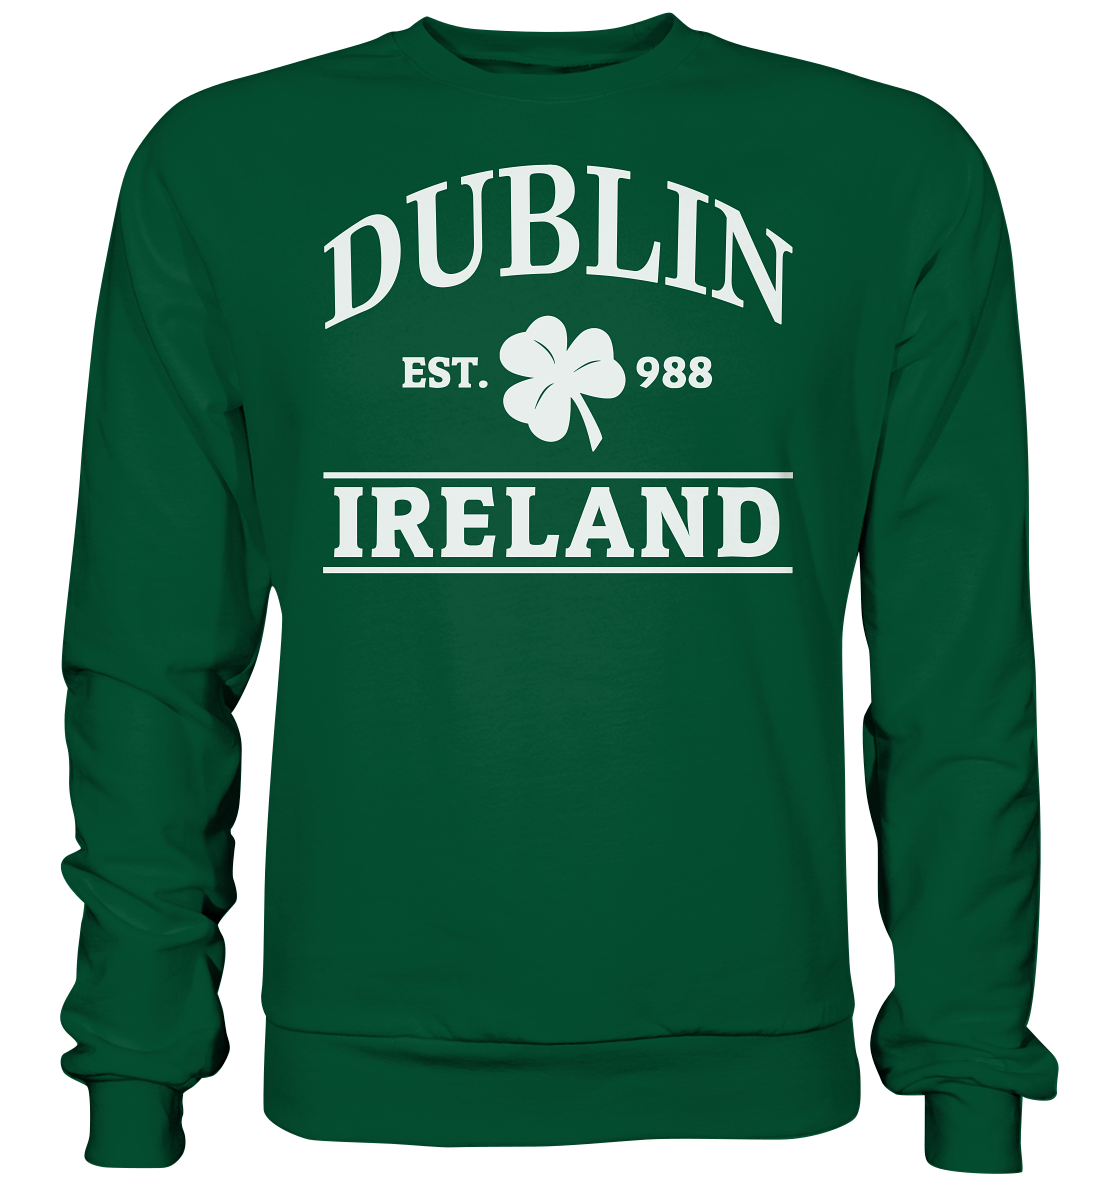 Dublin - Ireland "Est. 988" - Basic Sweatshirt